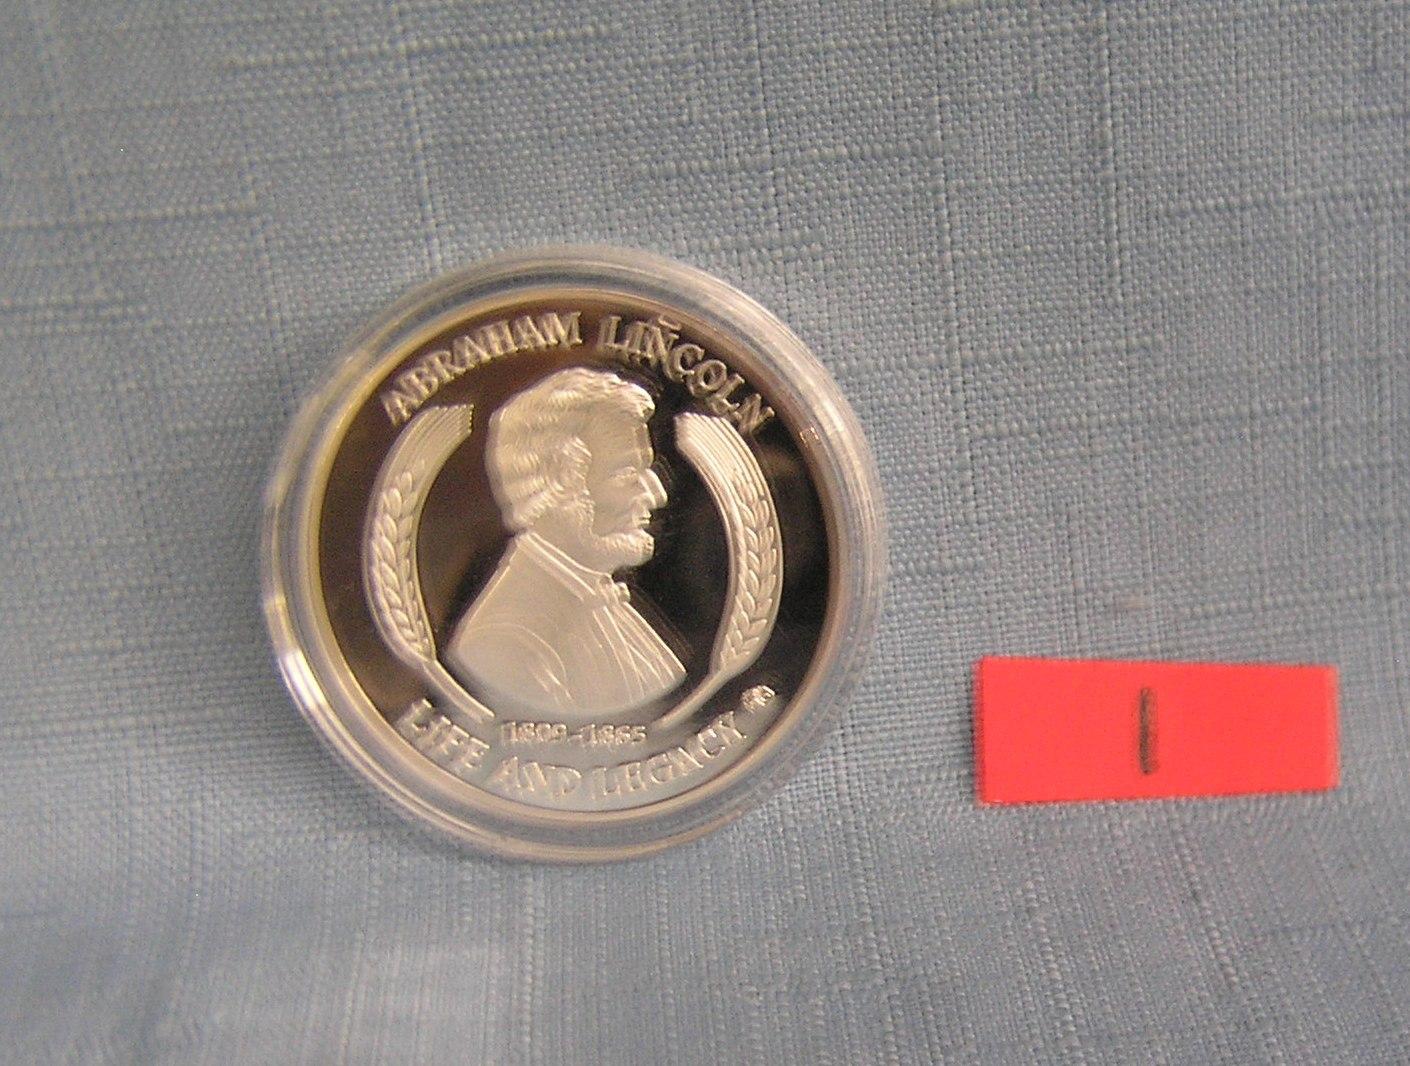 A. Lincoln Gettysburg address commemorative medallion